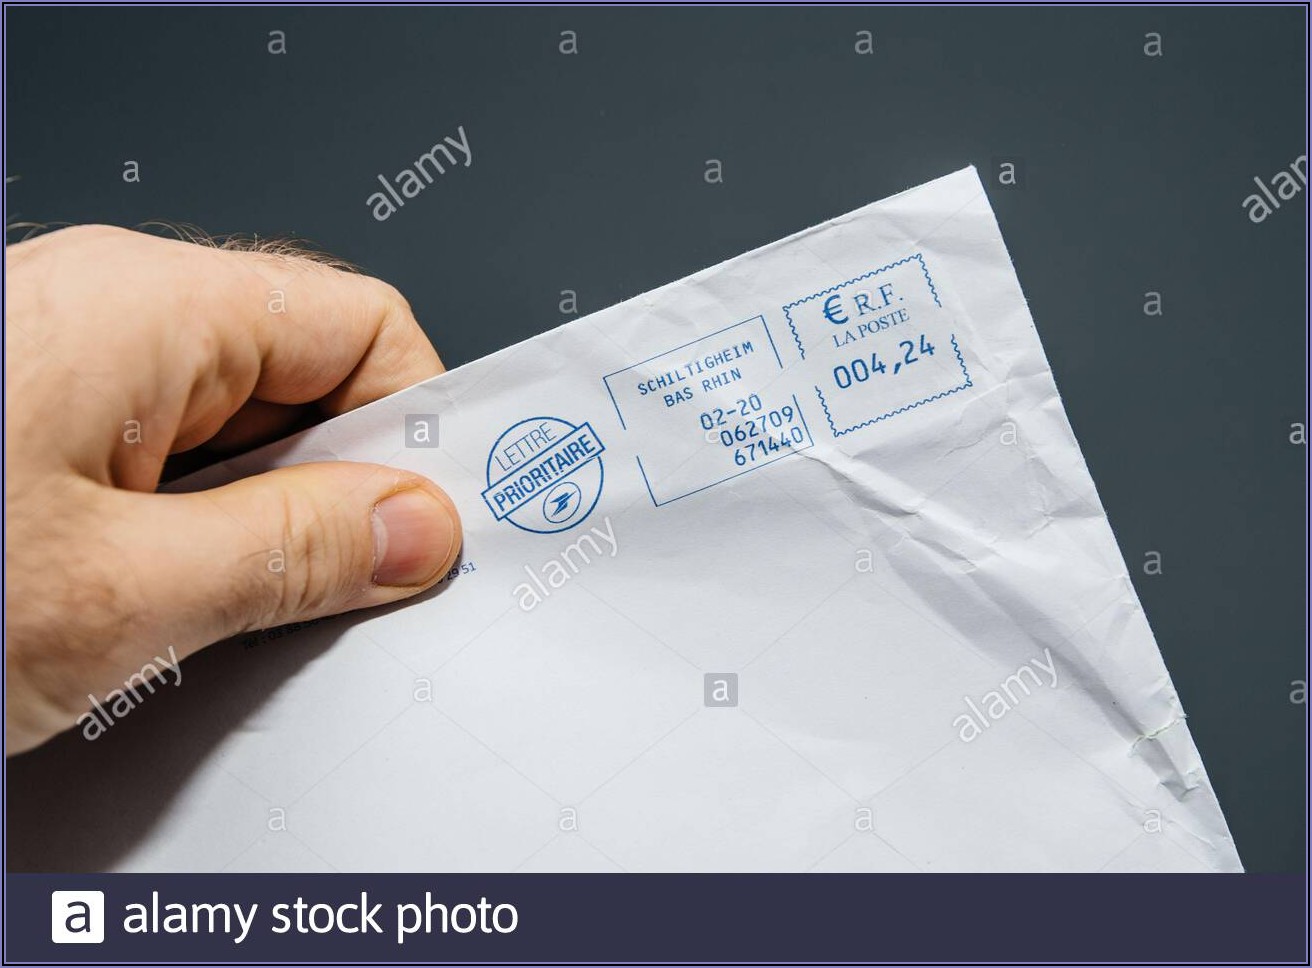 Priority Mail Envelope Image